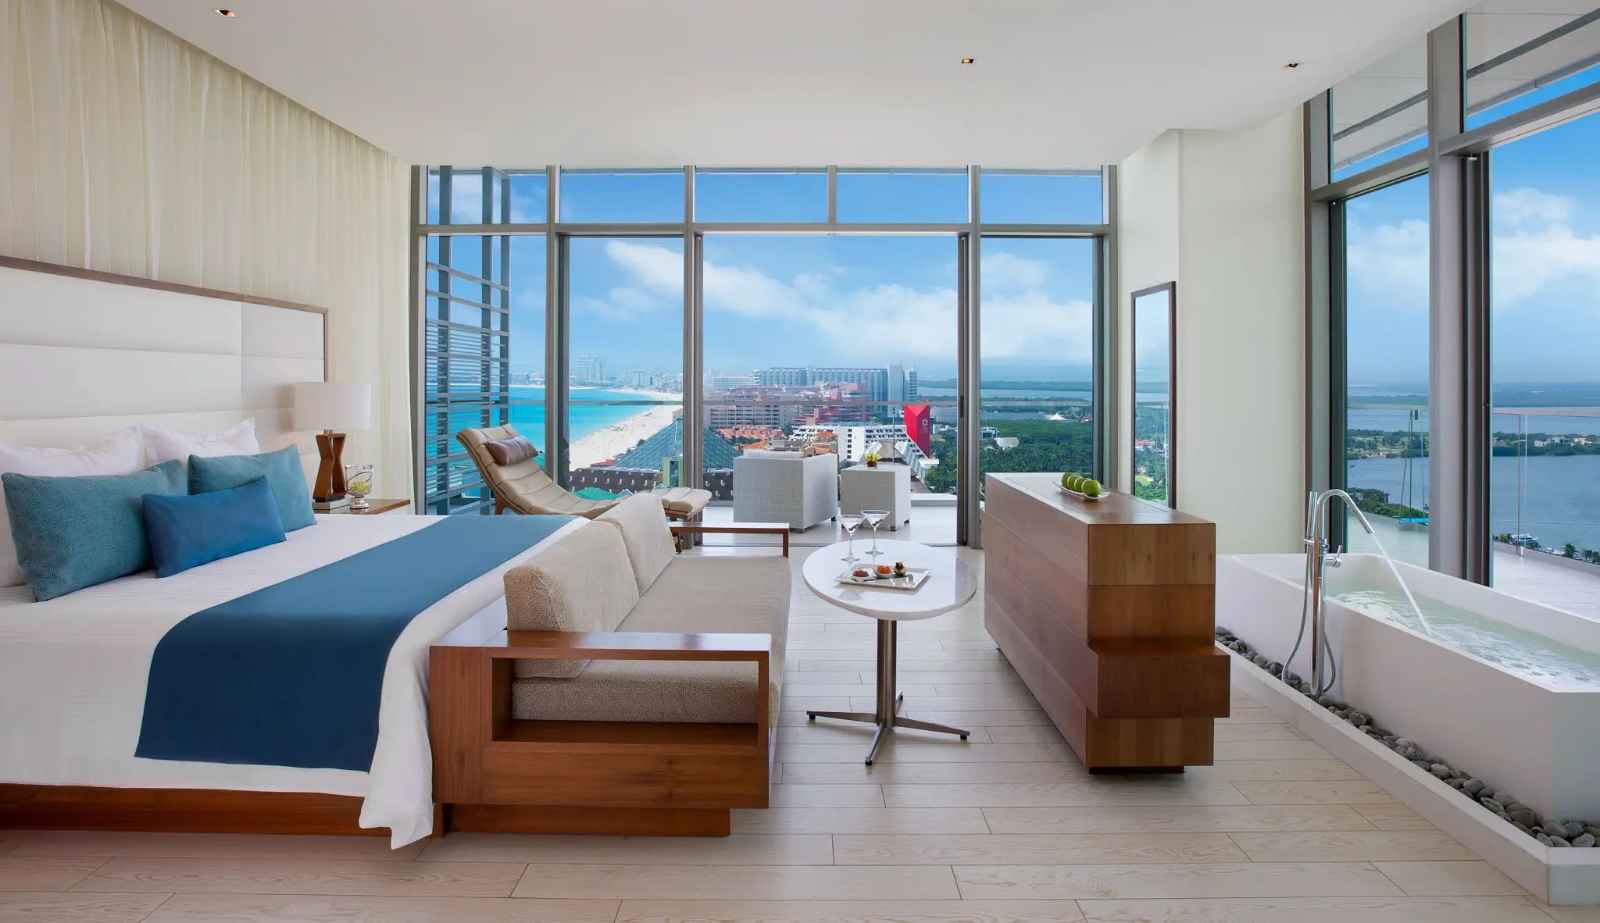 All Inclusive Resorts in Cancun Secrets The Vine Cancun penthouse views